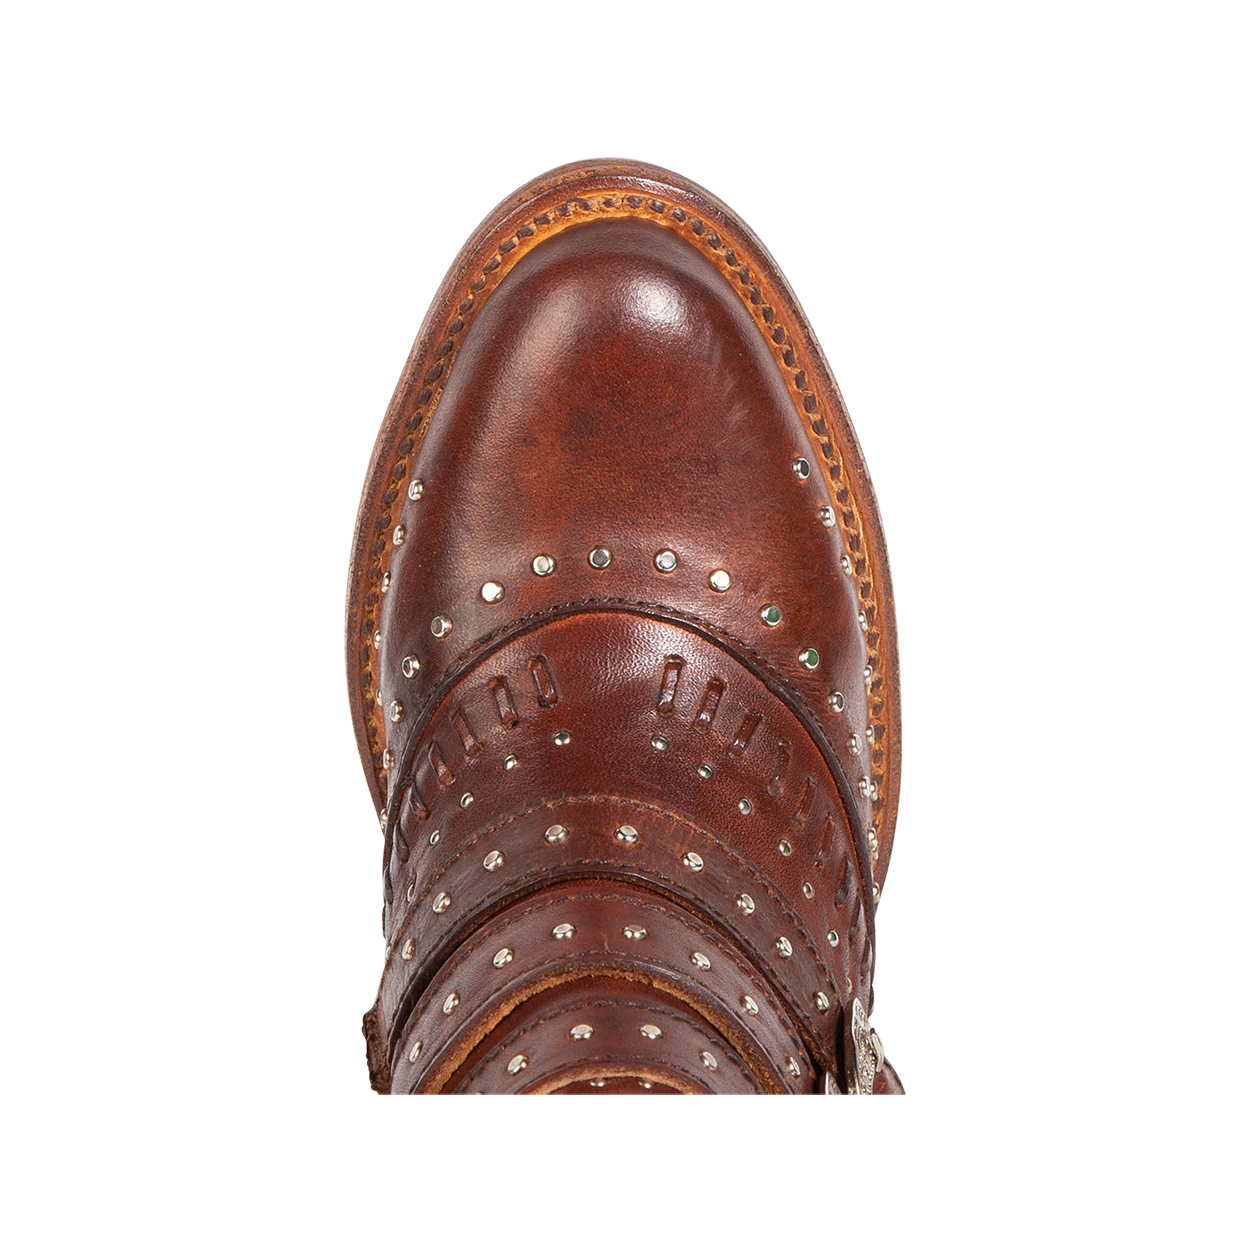 Top view showing almond toe on FREEBIRD women's Savanna cognac leather ankle bootie